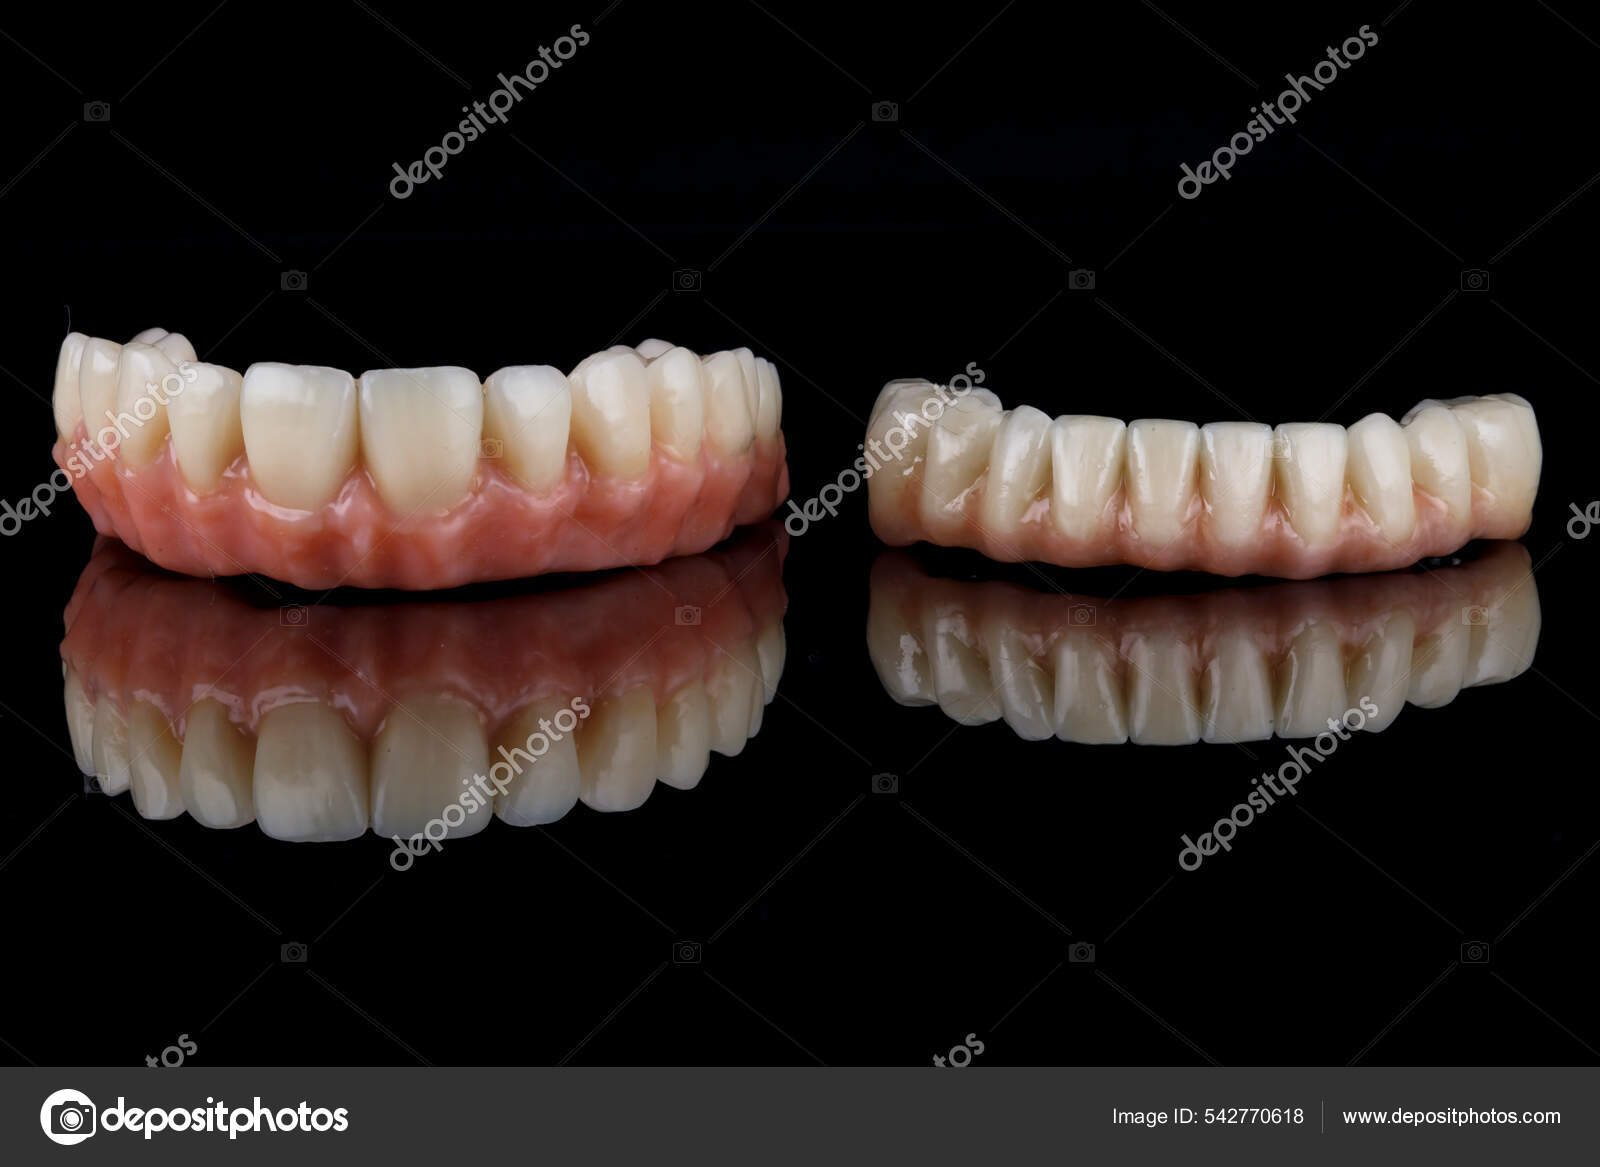 https://st.depositphotos.com/8994548/54277/i/1600/depositphotos_542770618-stock-photo-high-quality-dentures-upper-lower.jpg